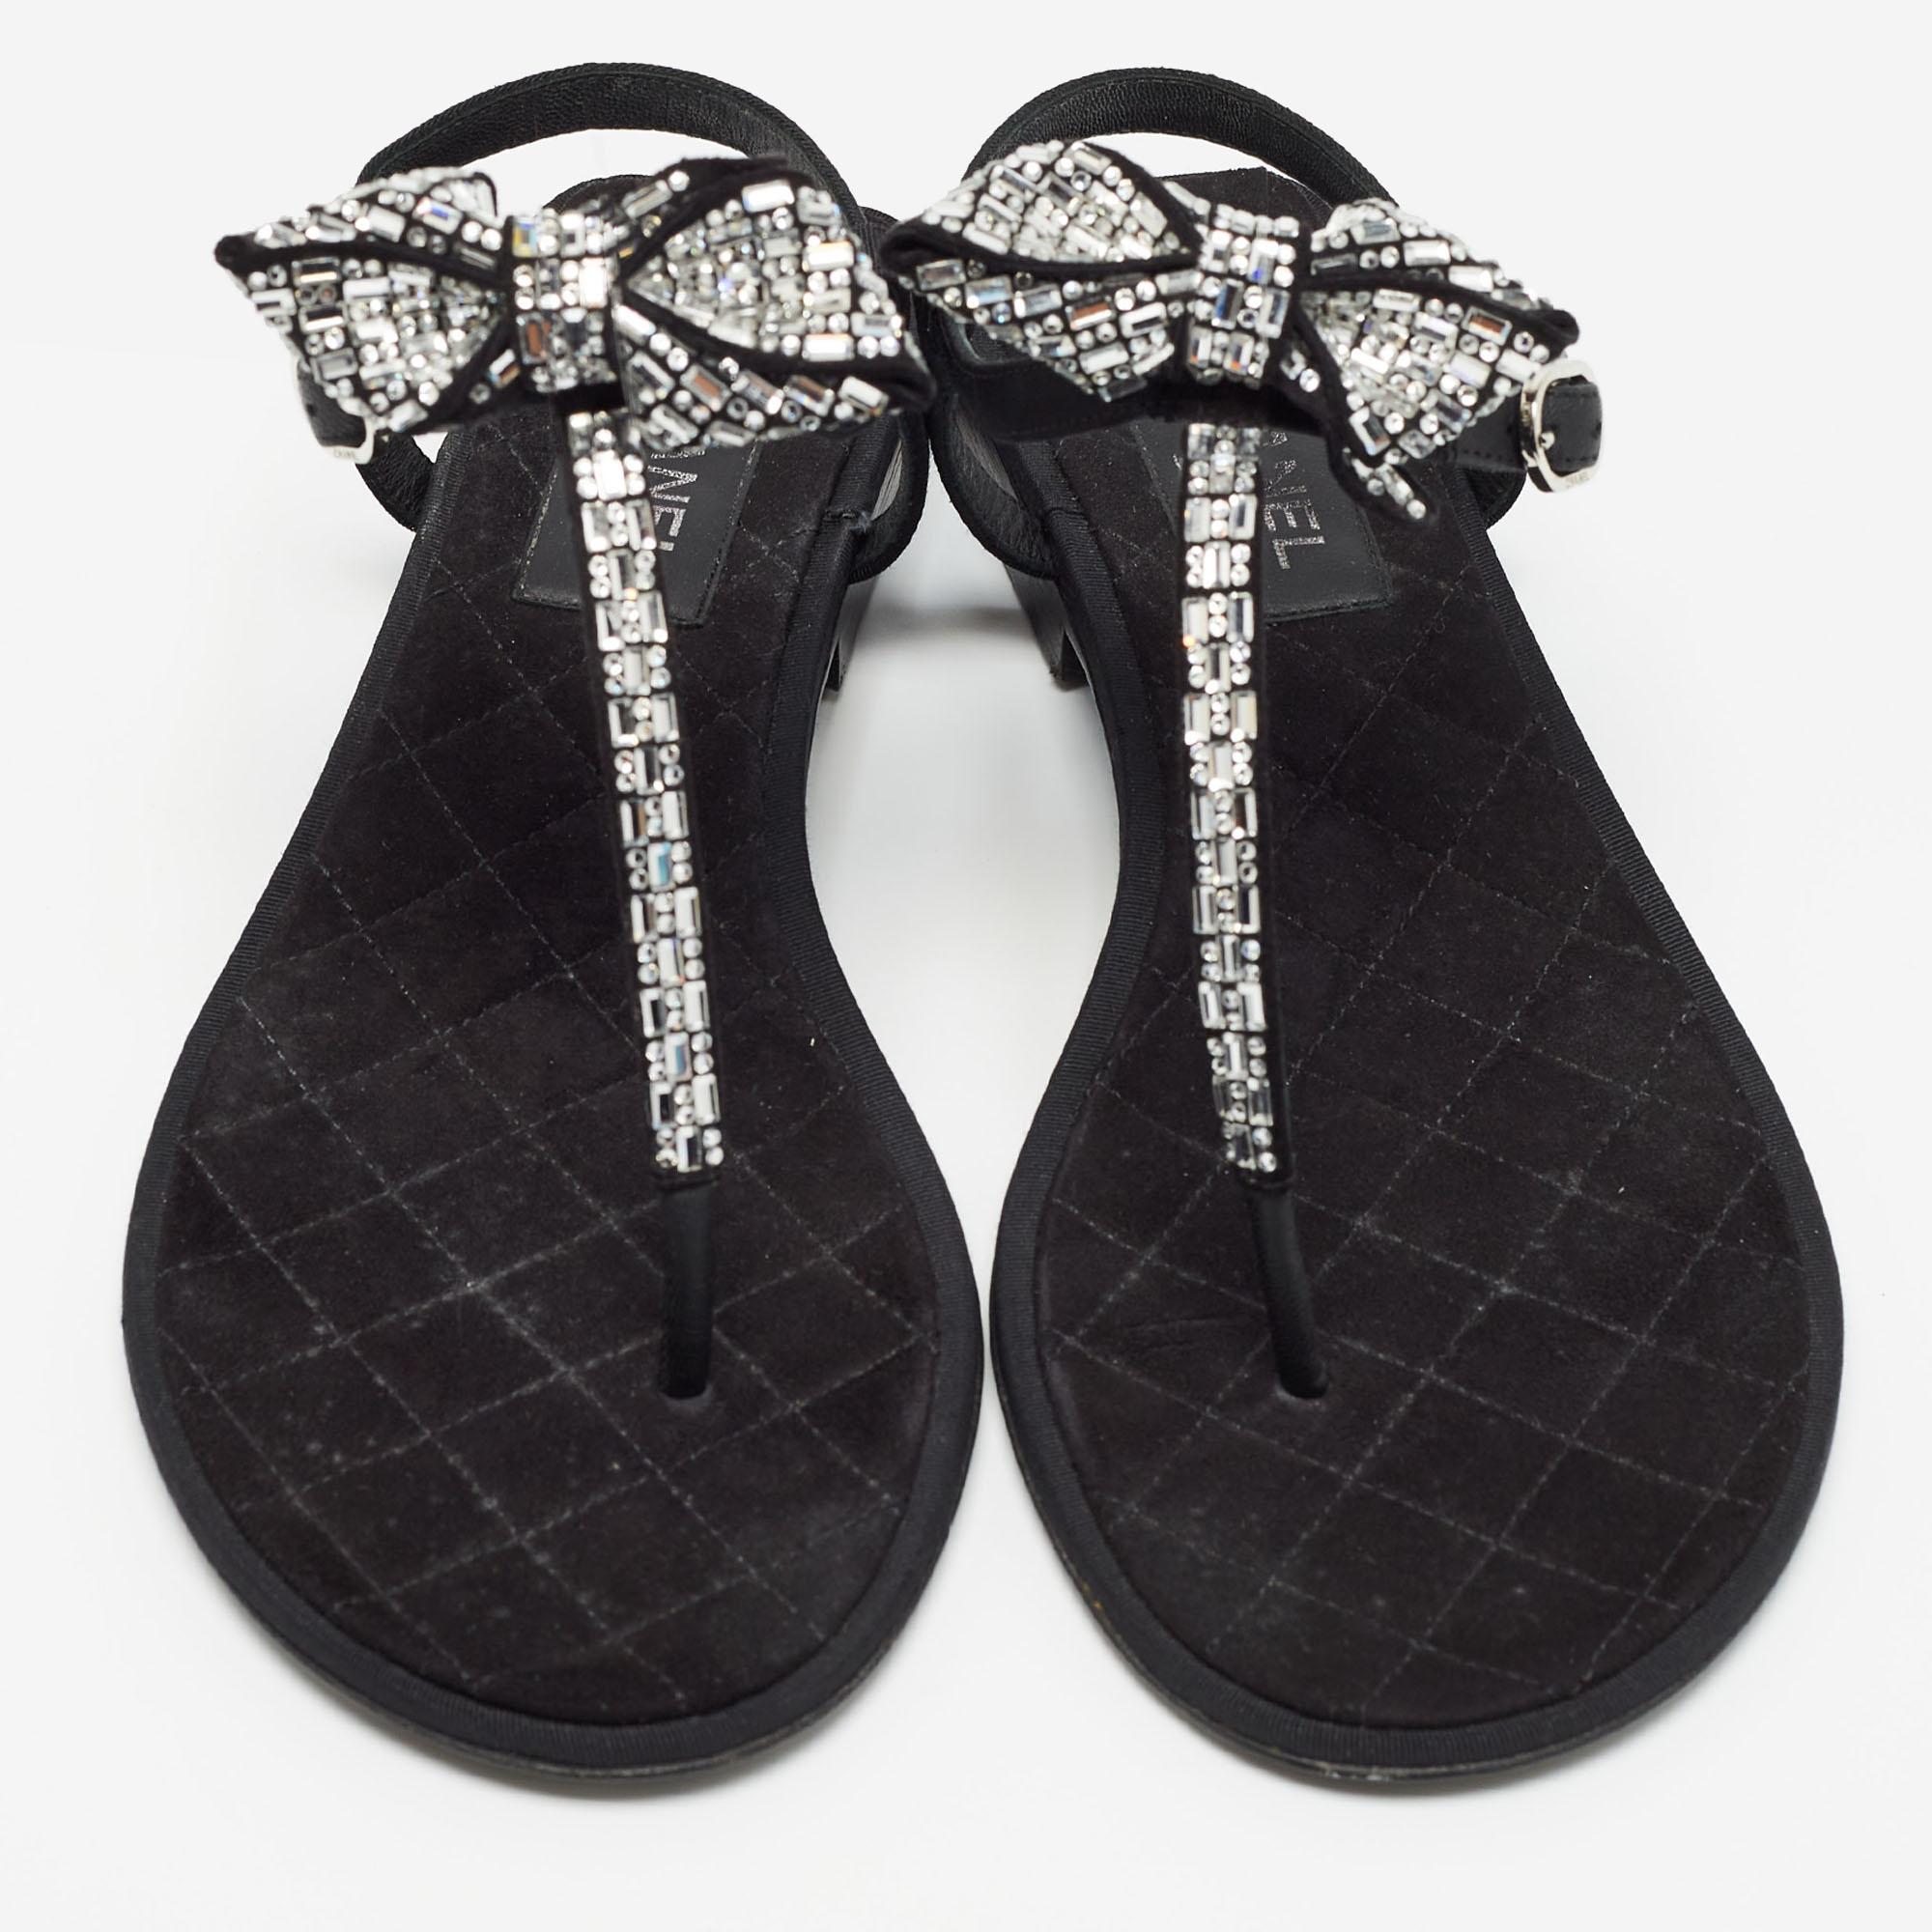 Chanel Black Canvas Embellished Bow Slingback Flat Sandals Size 38.5 For Sale 1